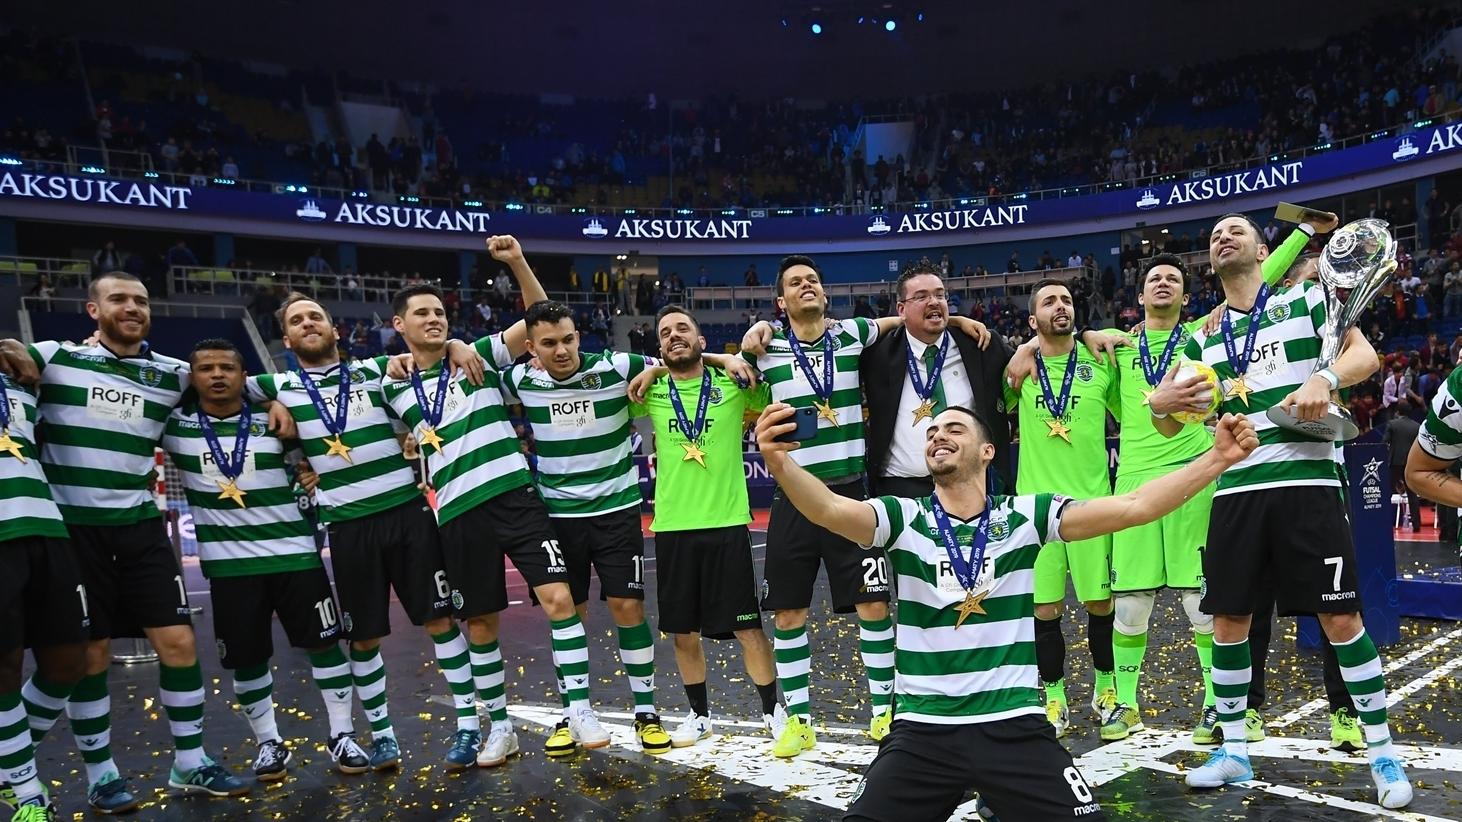 2019/20 UEFA Futsal Champions League 